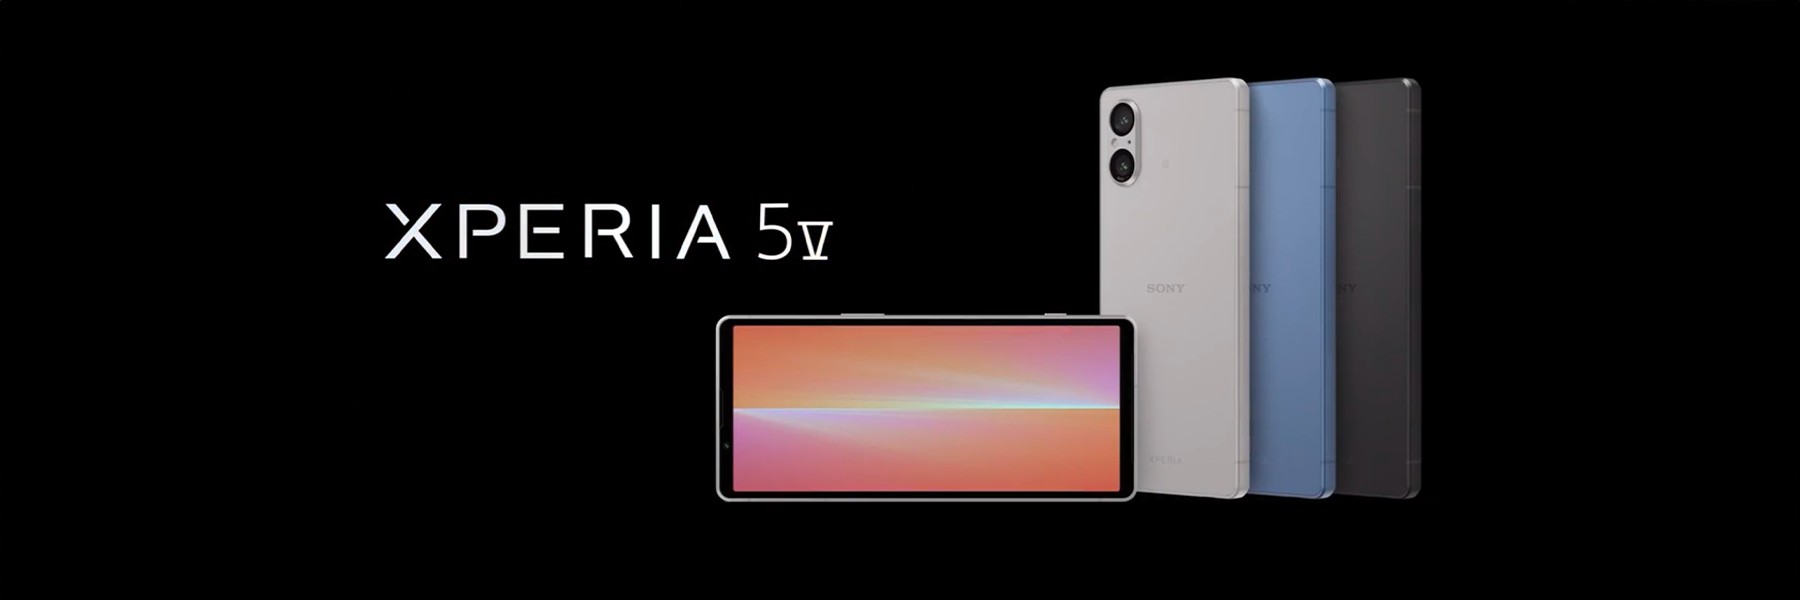 Sony unveils the new smartphone design